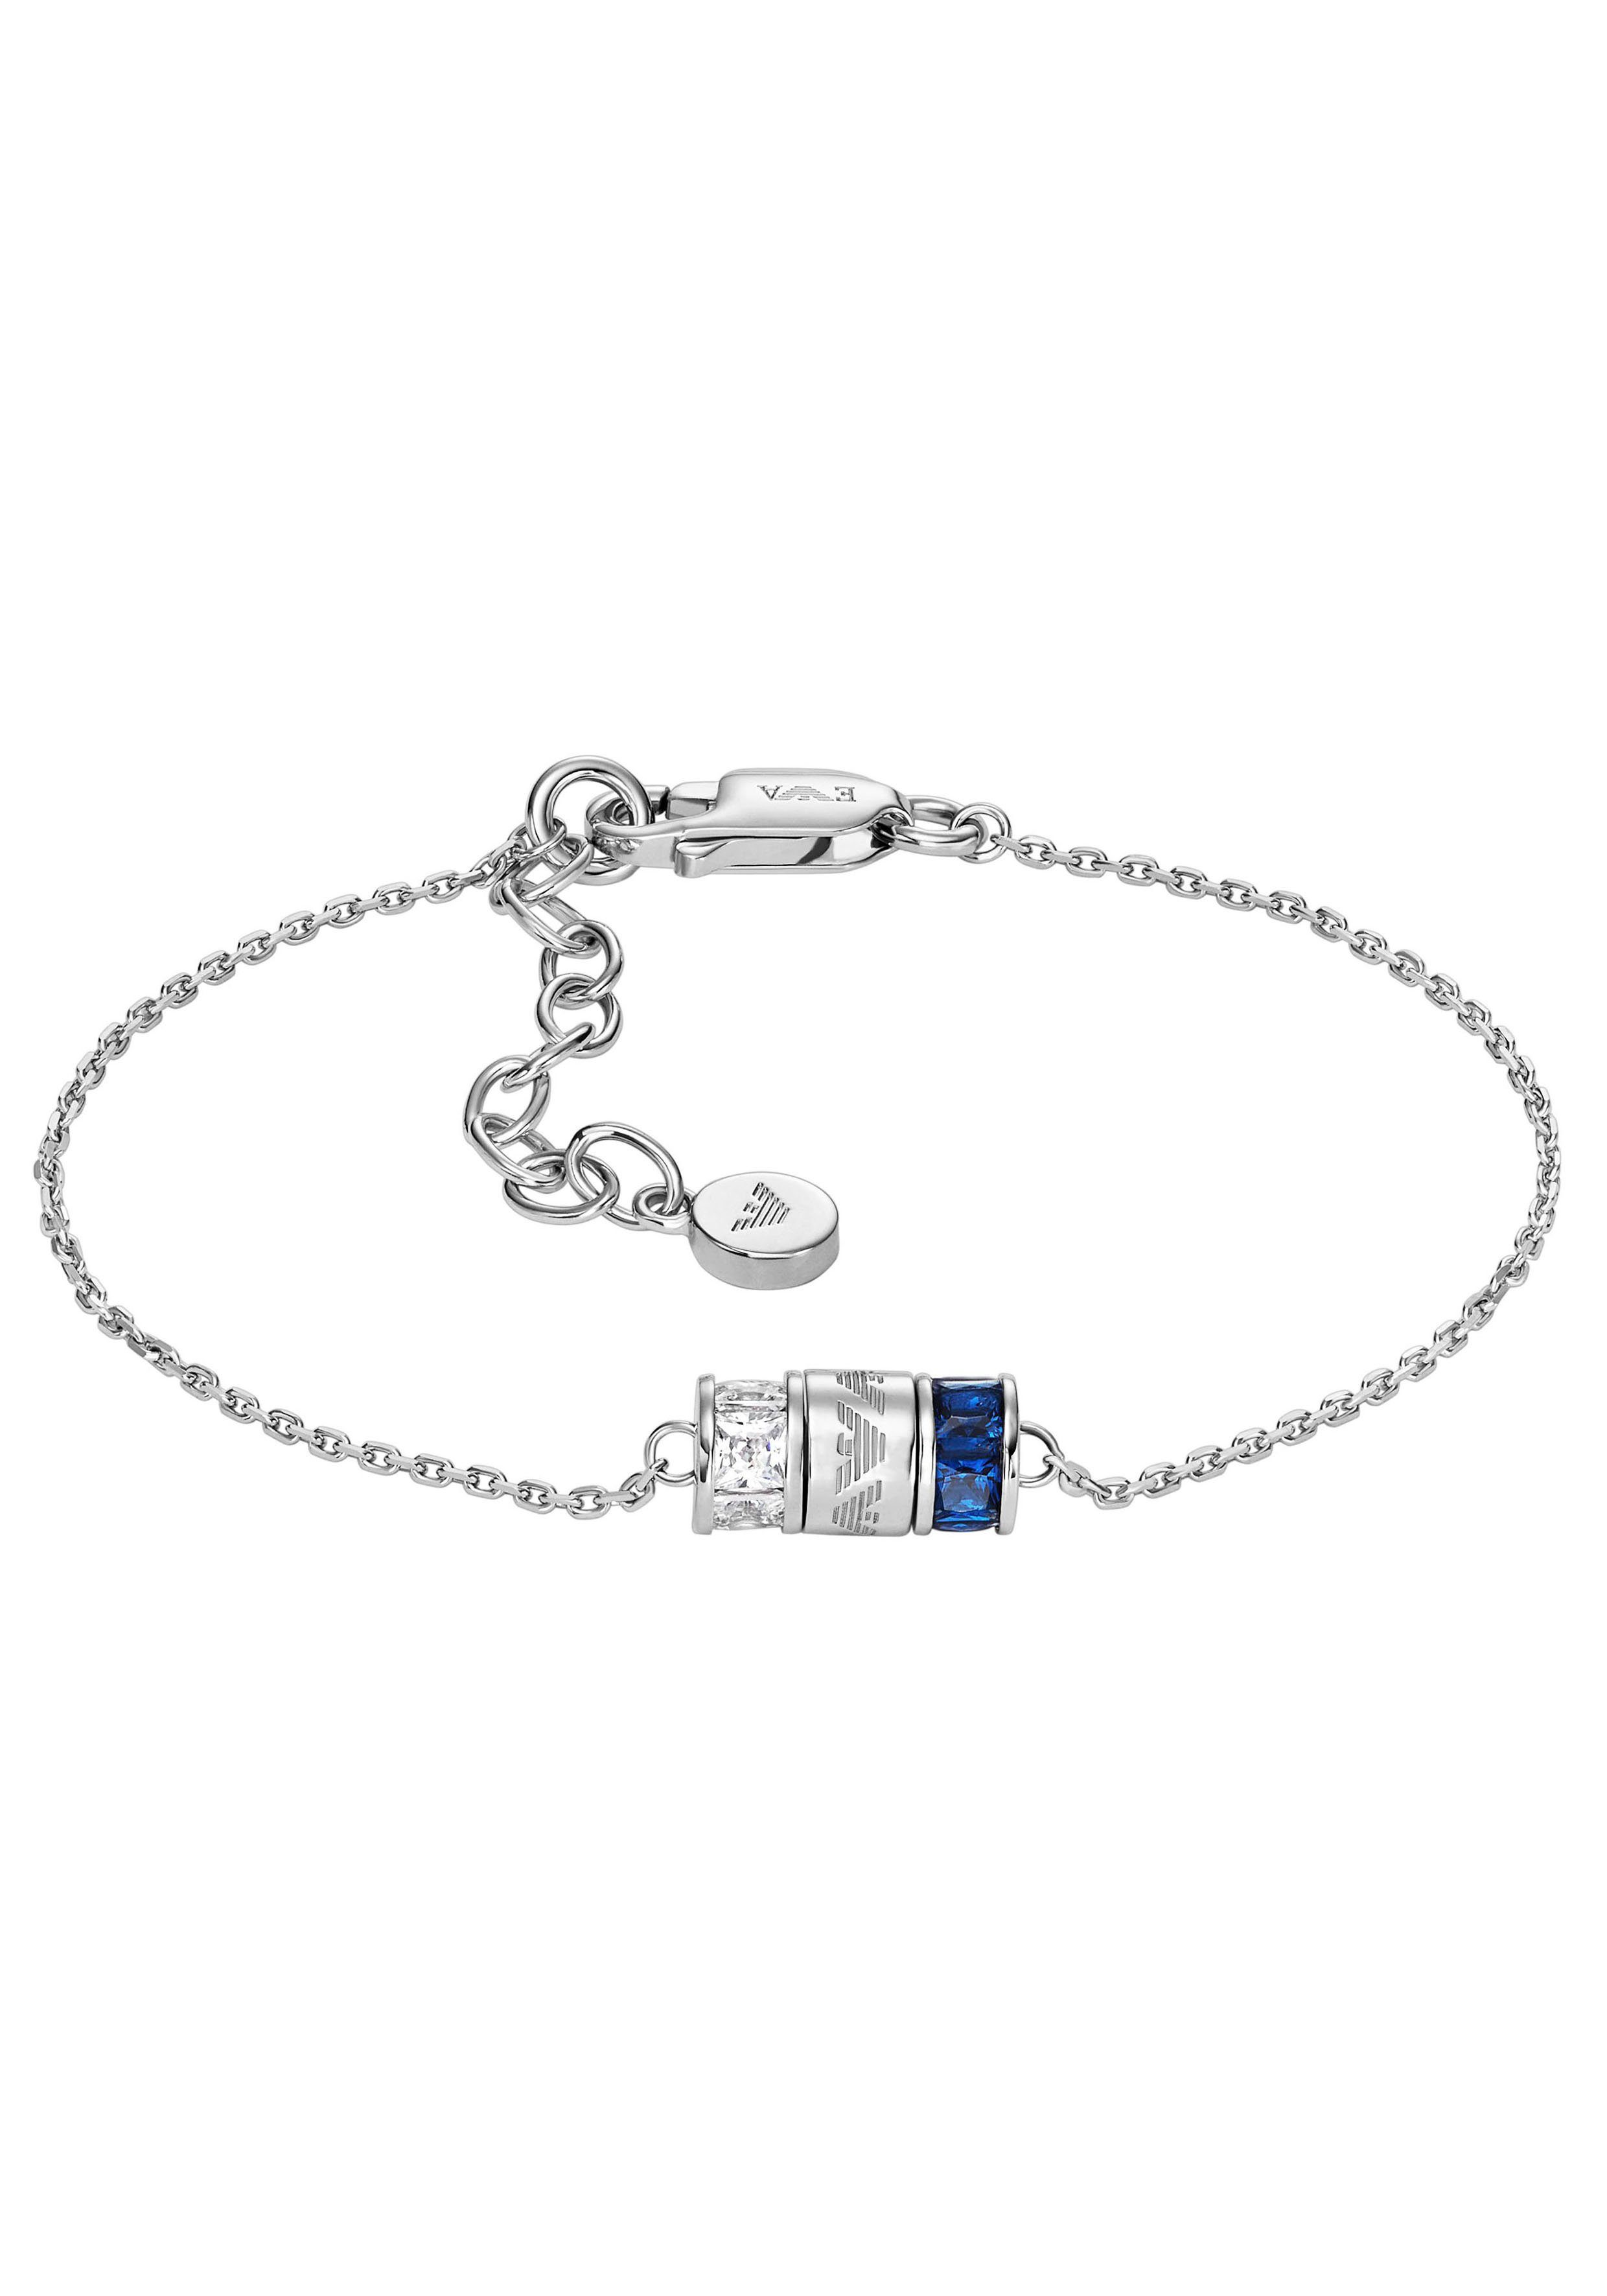 Emporio Armani Armband EG3579221, EG3580040, mit Zirkonia (synth) silberfarben-kristallweiß-blau | Silberarmbänder